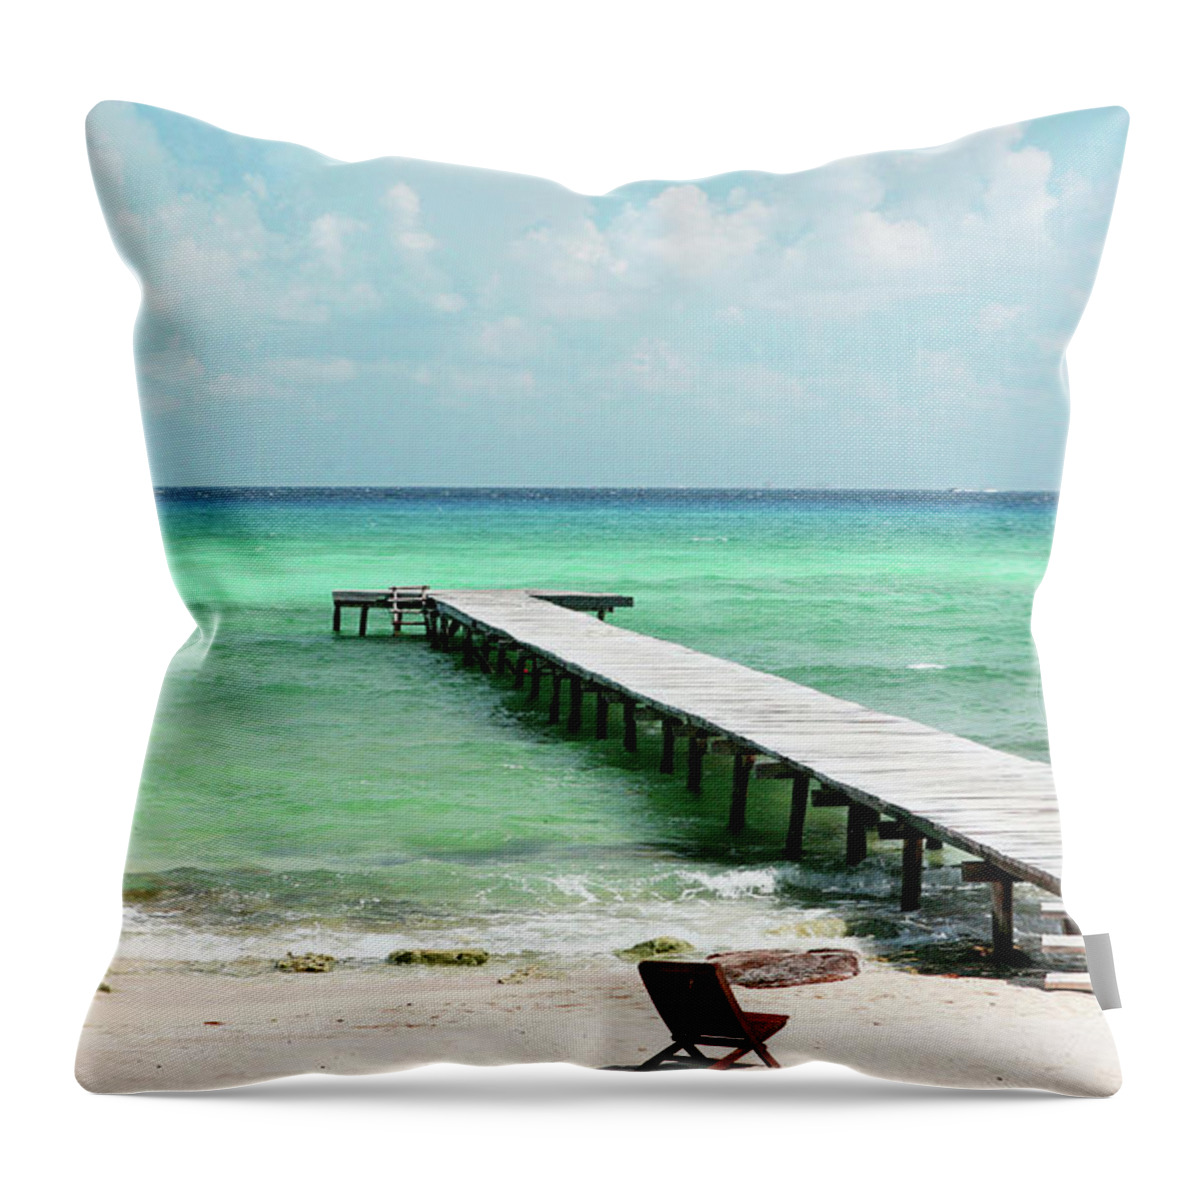 Estock Throw Pillow featuring the digital art Wooden Dock, Playa Del Carmen, Mexico by Joanne Montenegro